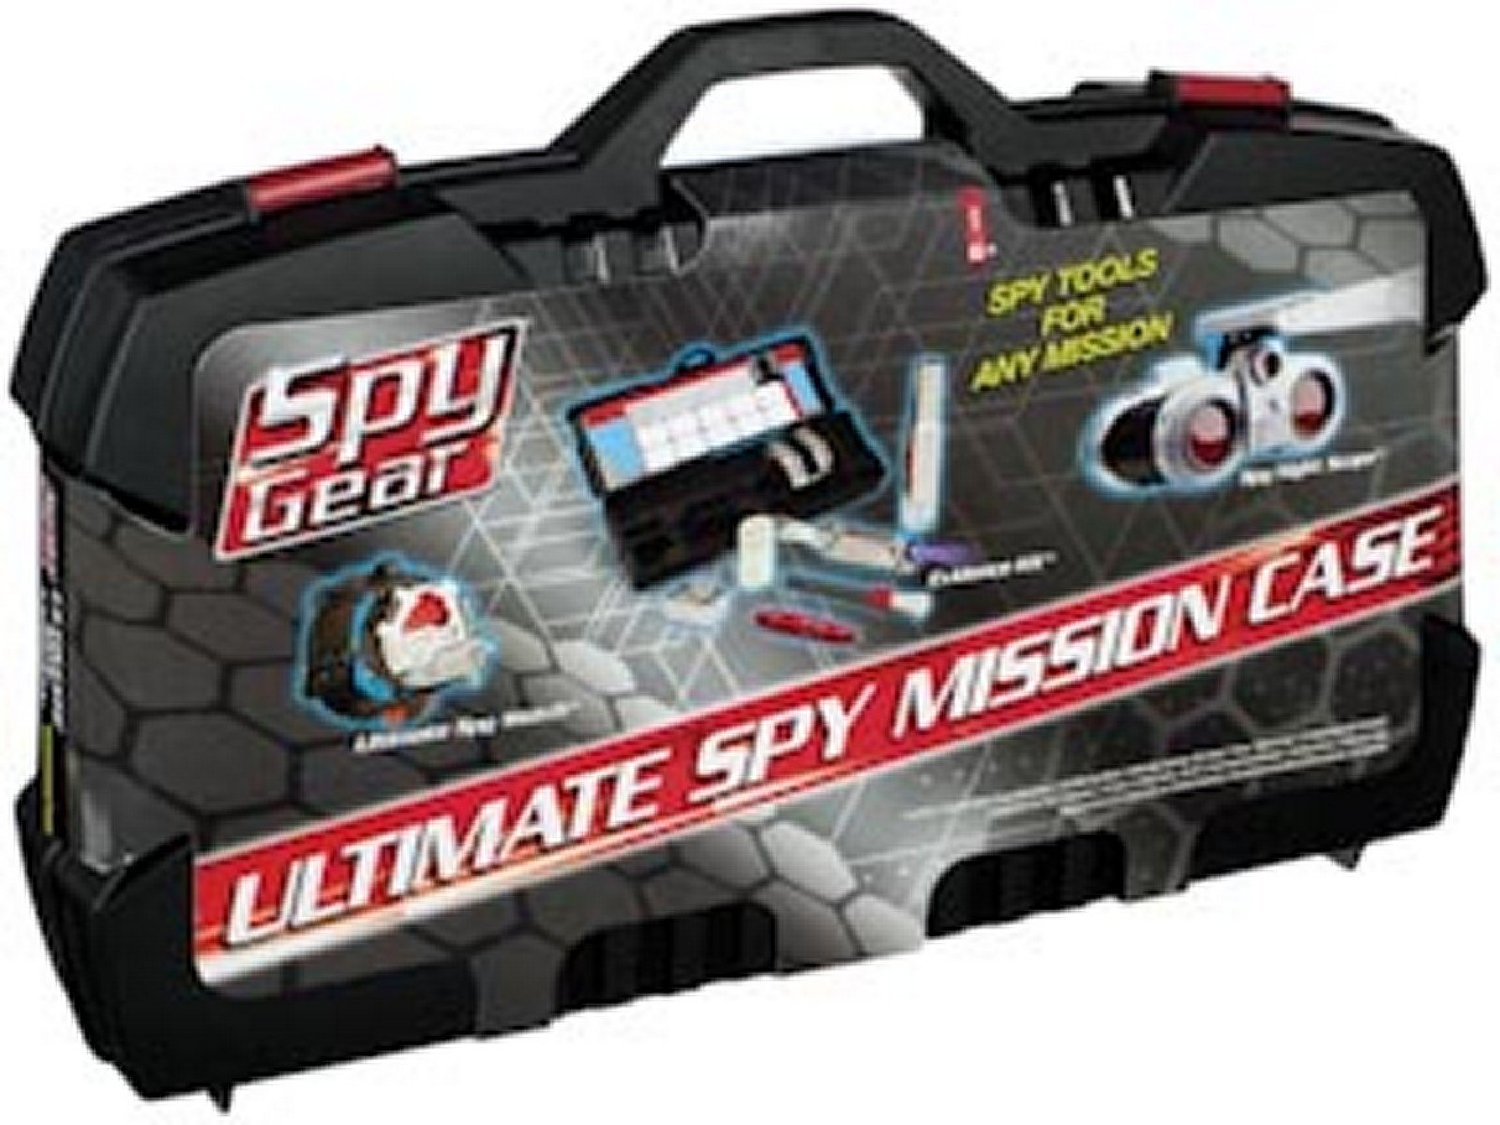 Ultimate Spy Mission Case